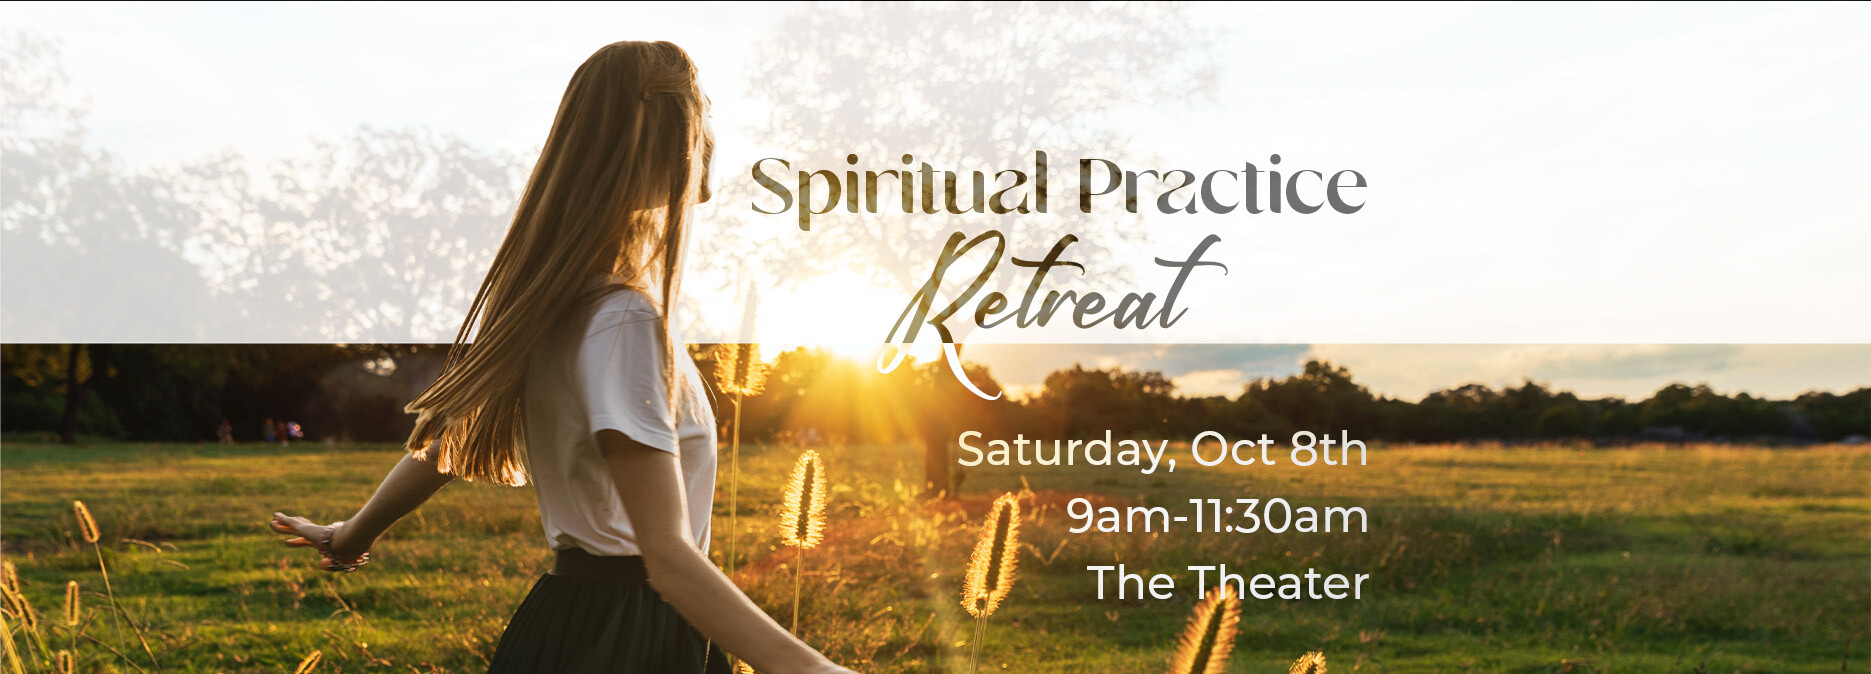 spiritual practice retreat